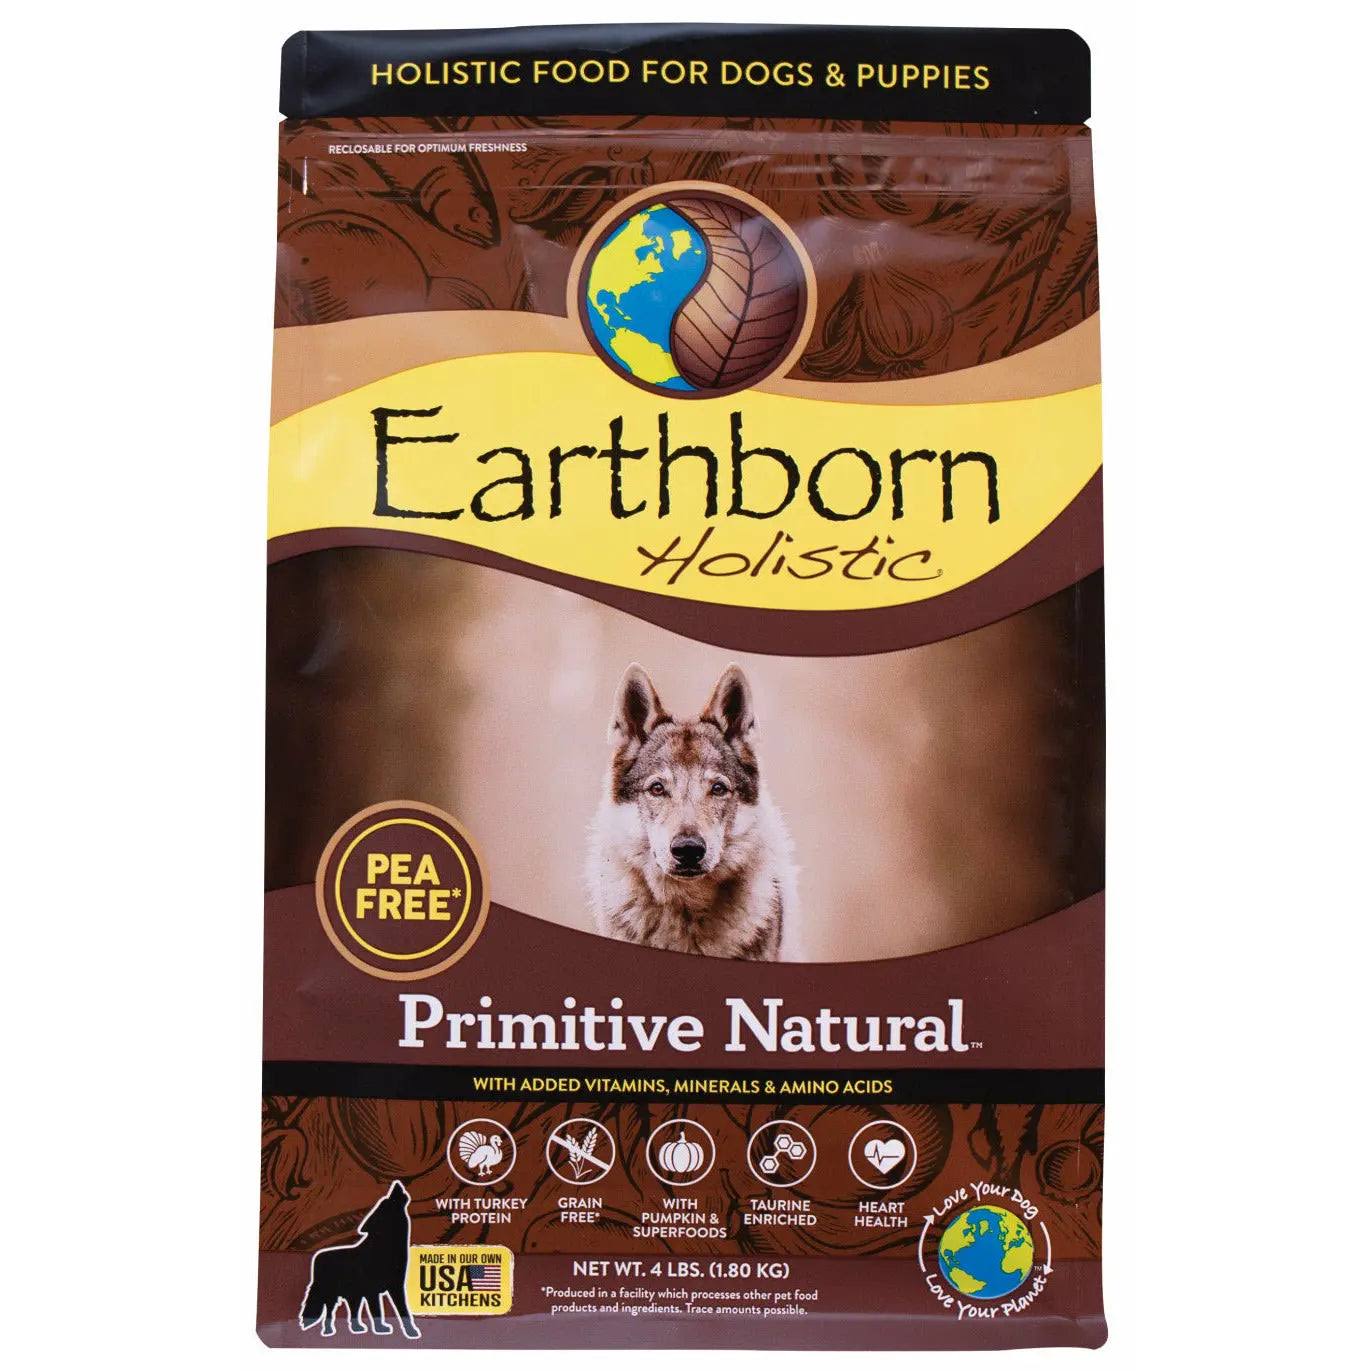 Earthborn Holistic Grain Free Primitive Natural Dog Food 14 lbs, 4 lb